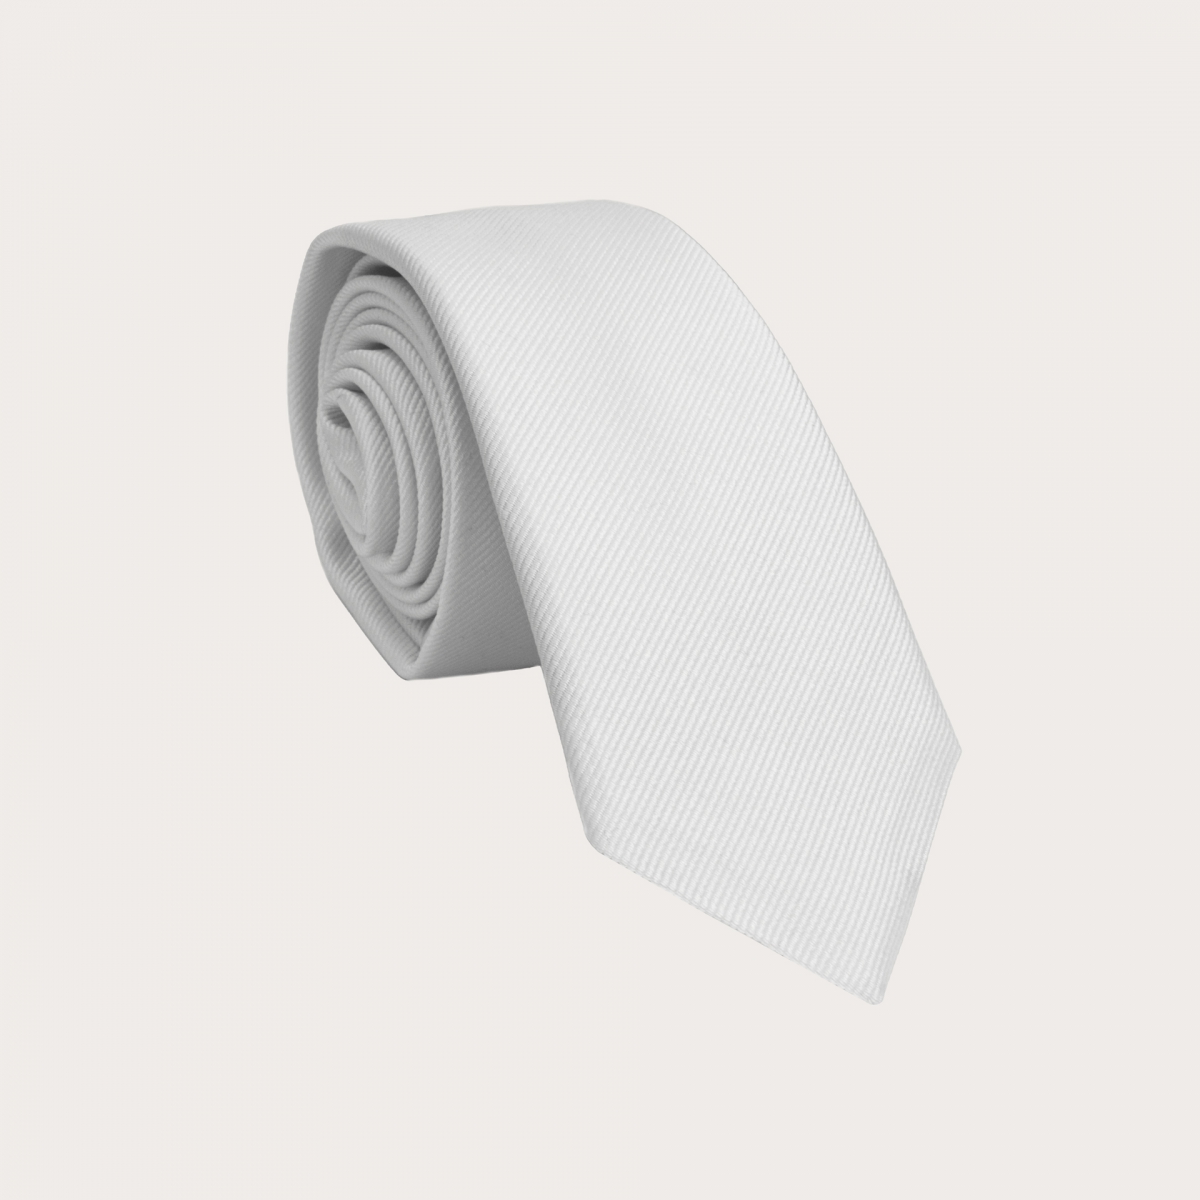 BRUCLE Corbata delgada blanca de seda